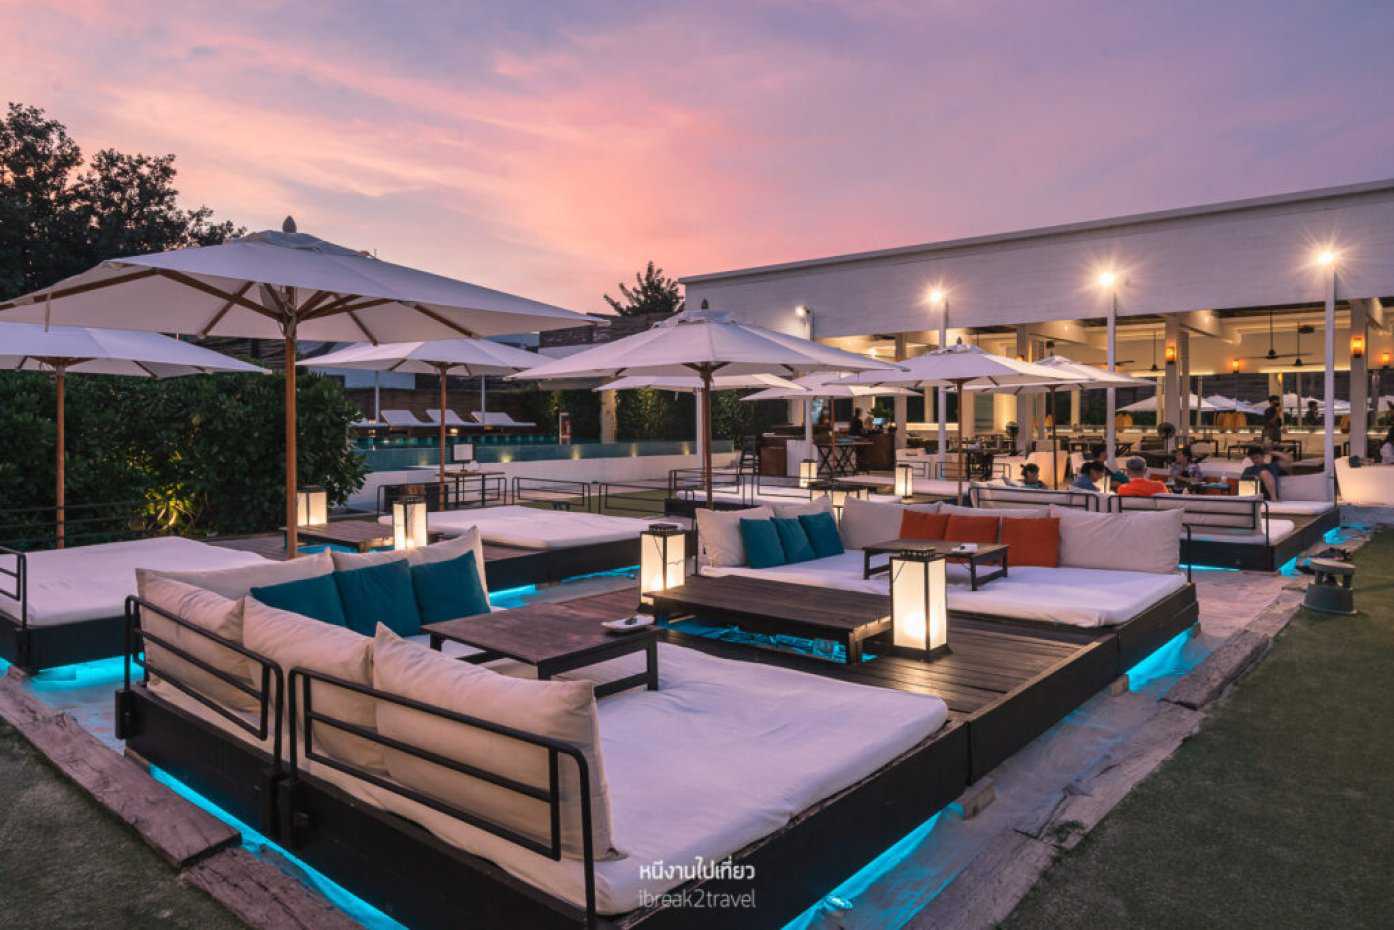 Oceanside Beach Club & Restaurant : ประจวบคีรีขันธ์